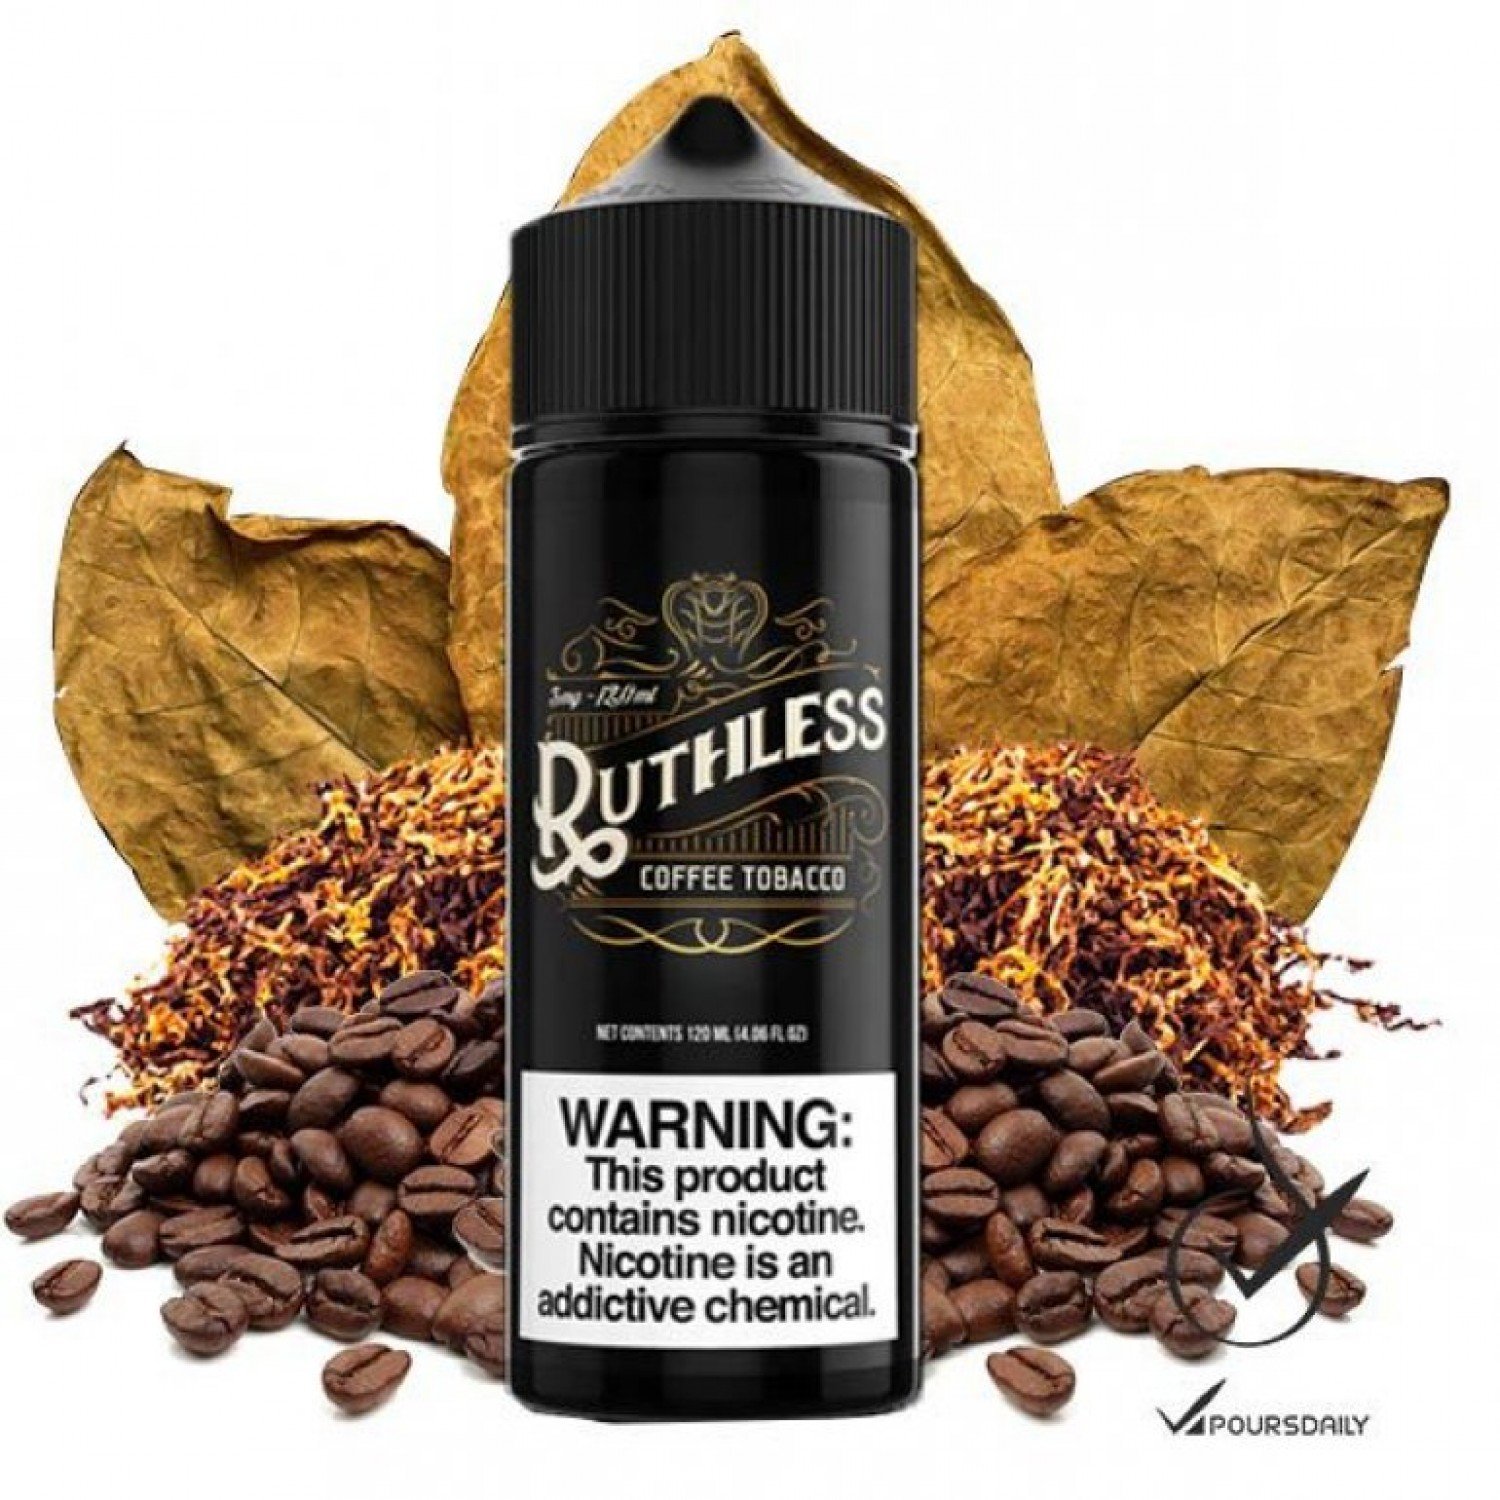 Ruthless - Coffee Tobacco 120 ml Premium Likit